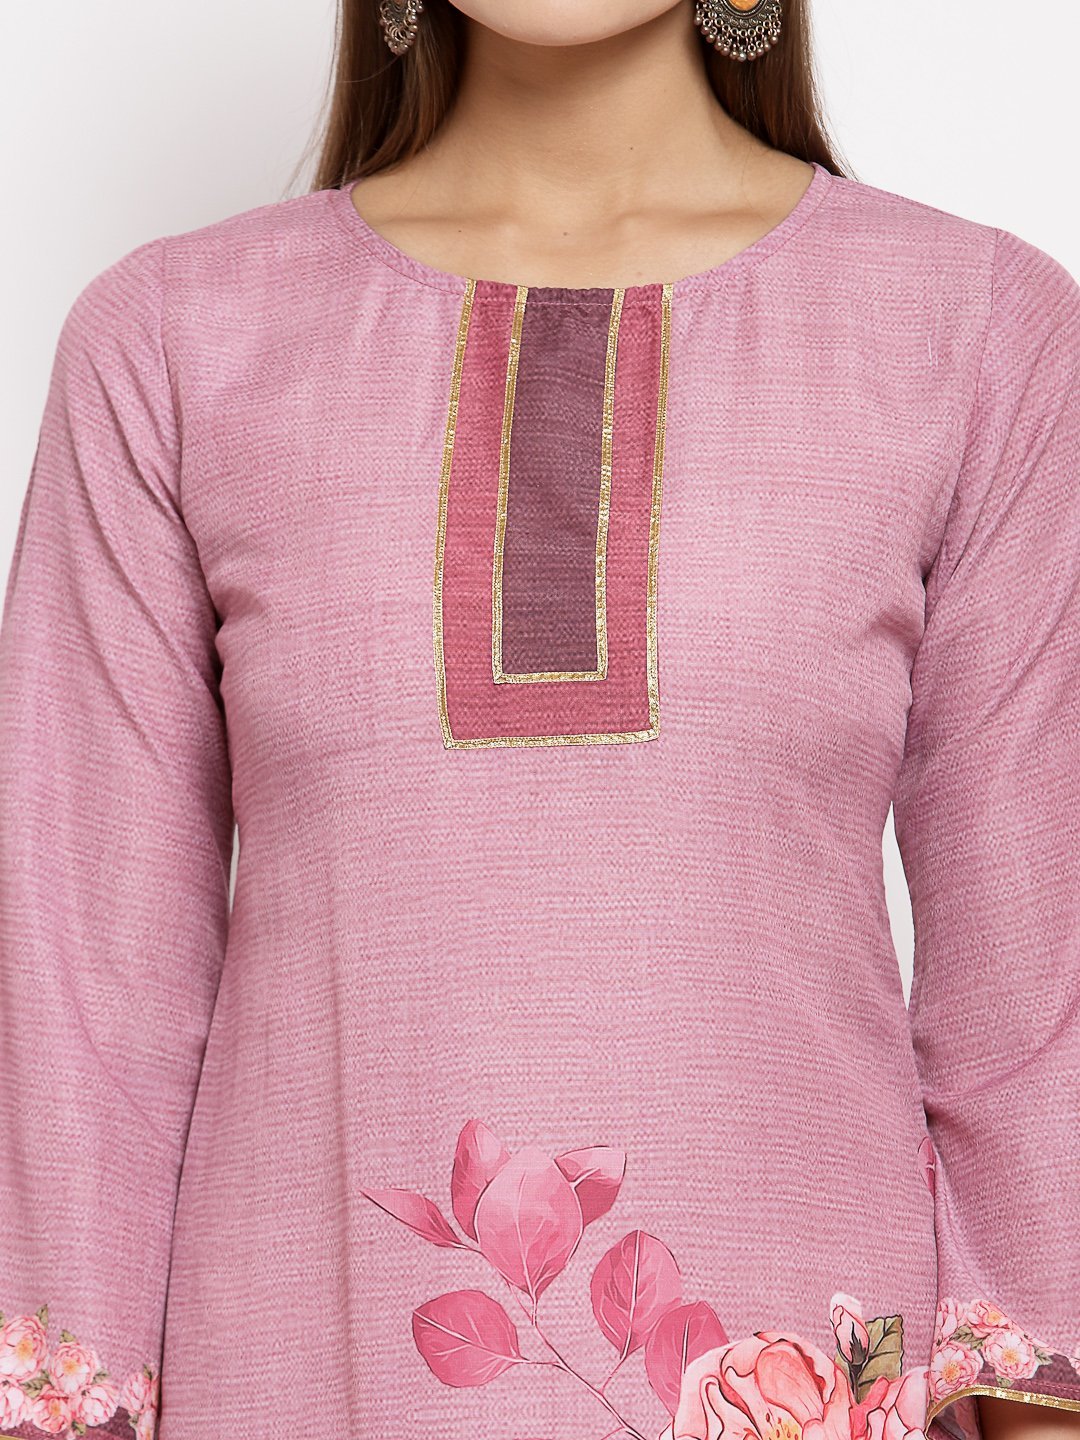 Women's Pink Cotton Printed Full Sleeve Round Neck Casual Kurta - Myshka